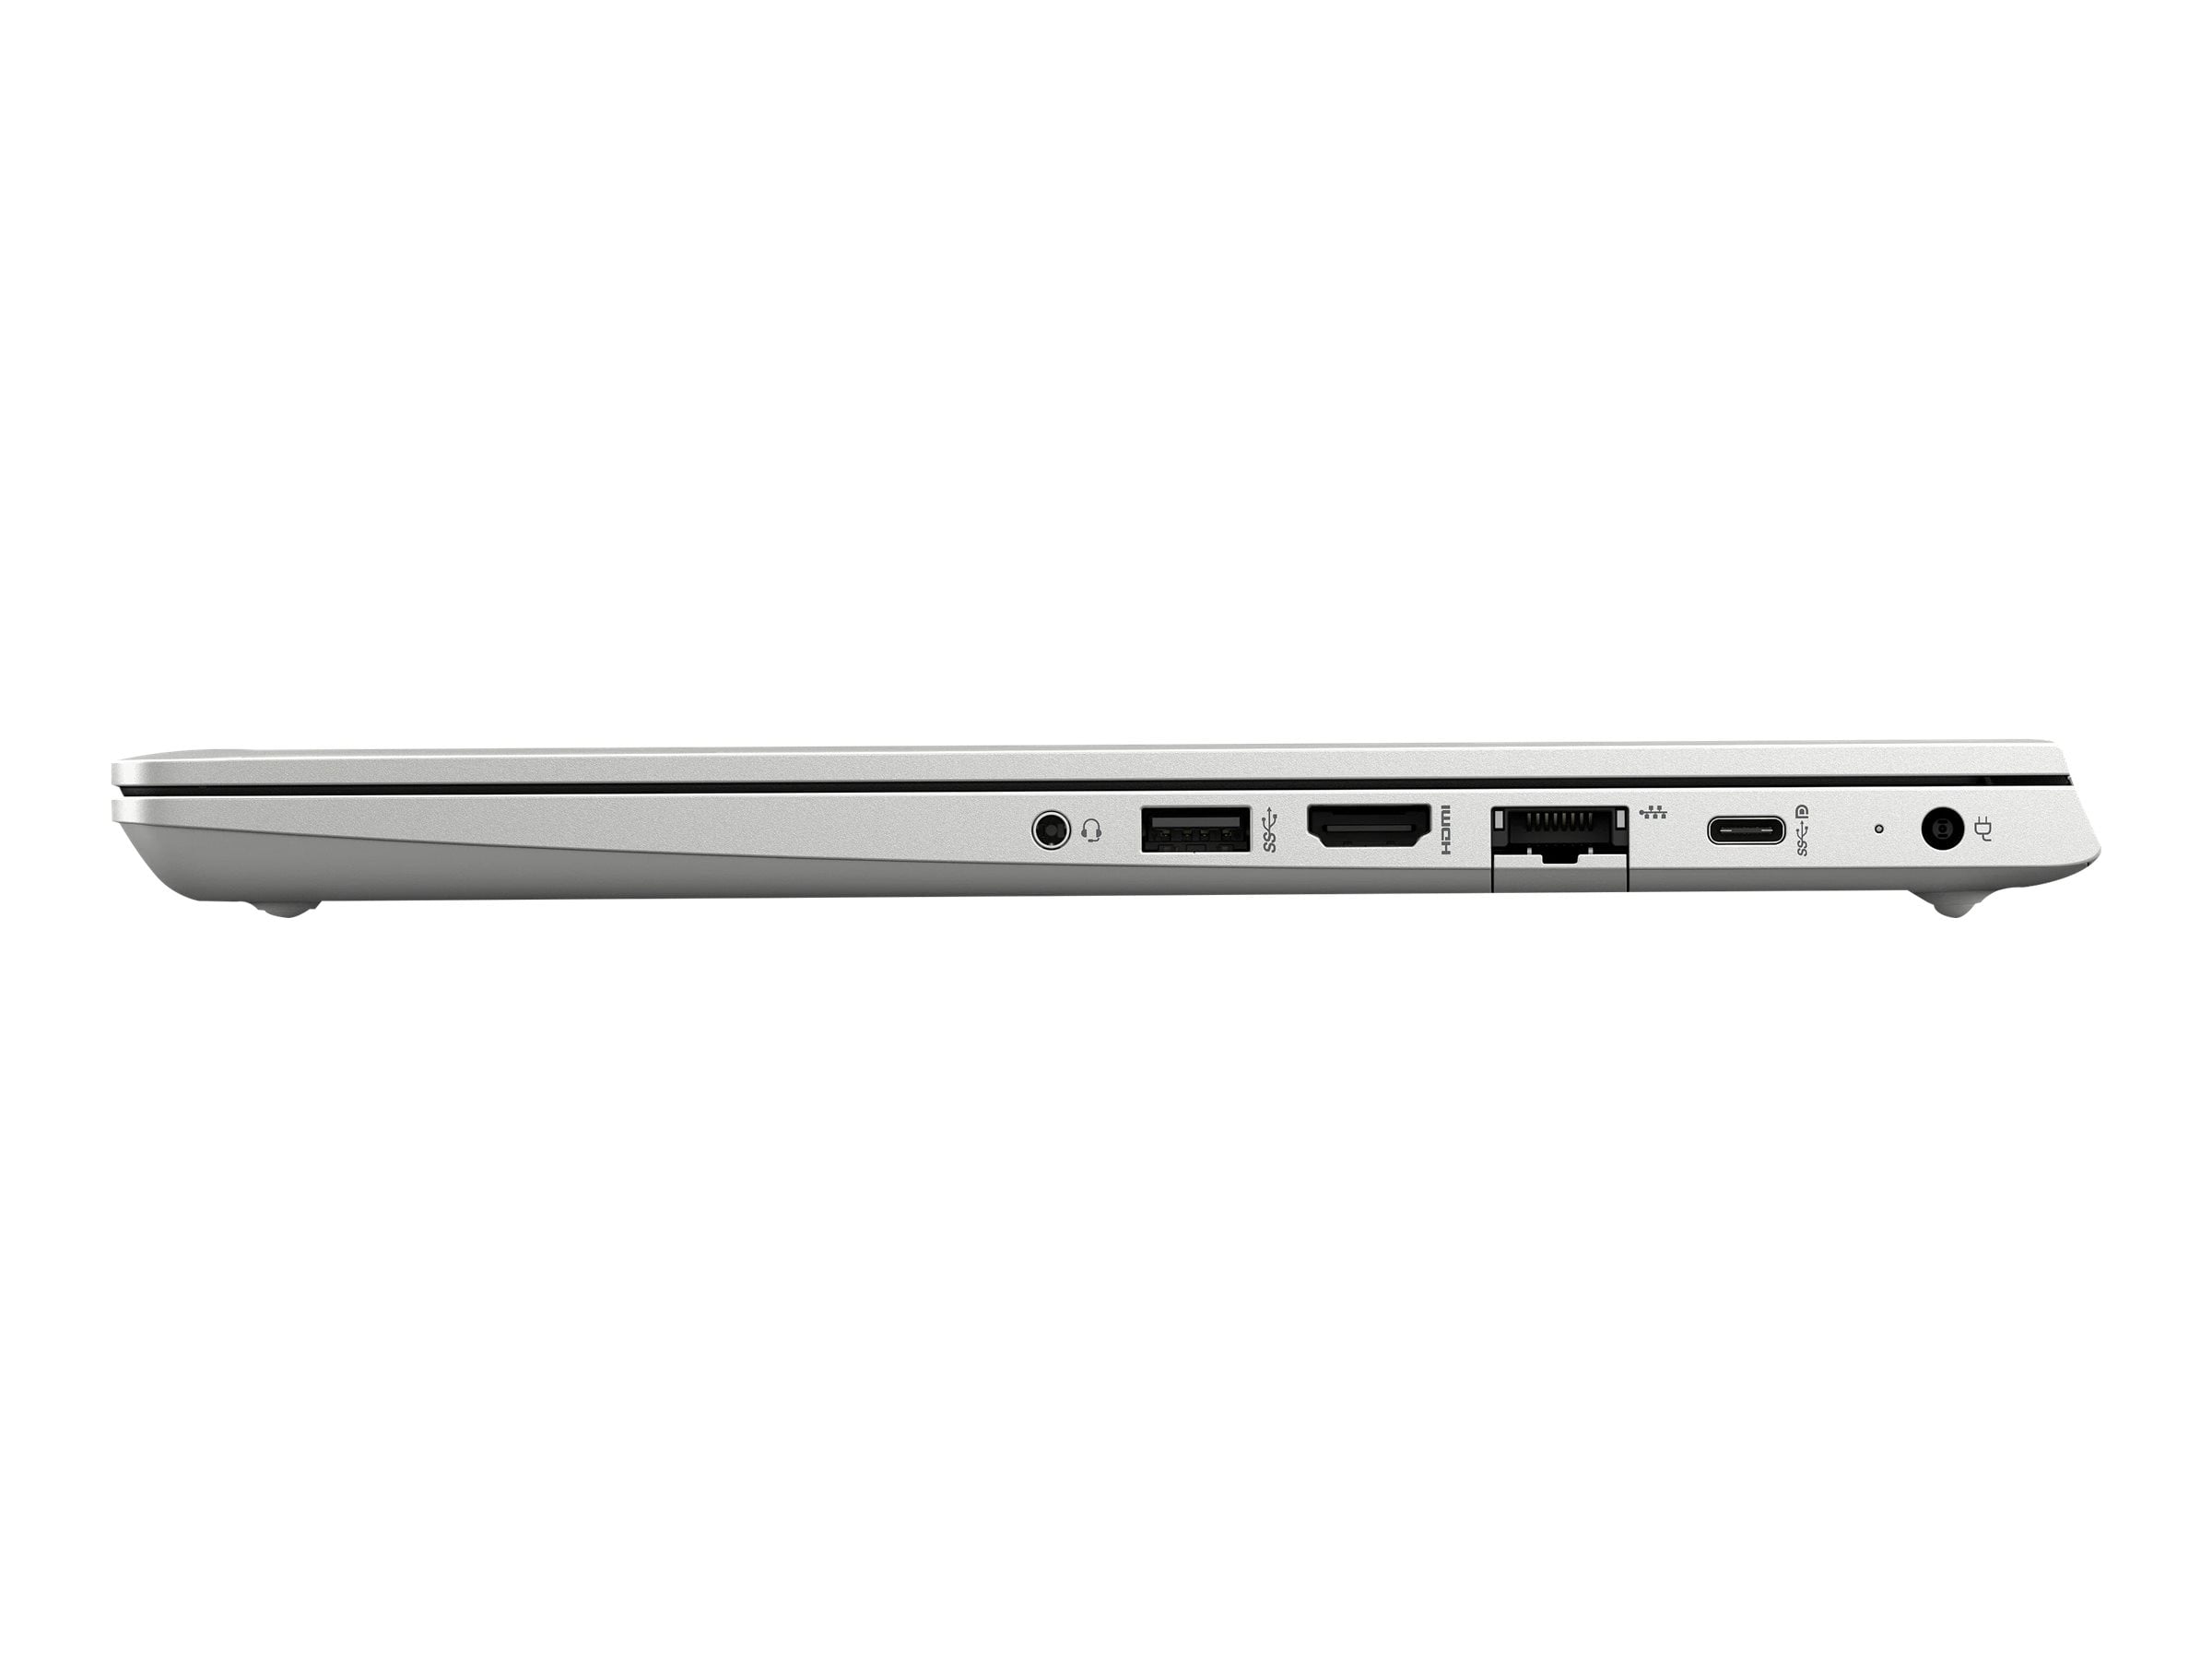 HP ProBook 430 G6 Notebook Laptop,13.3,i7 8th Gen,UHD 620,16 GB